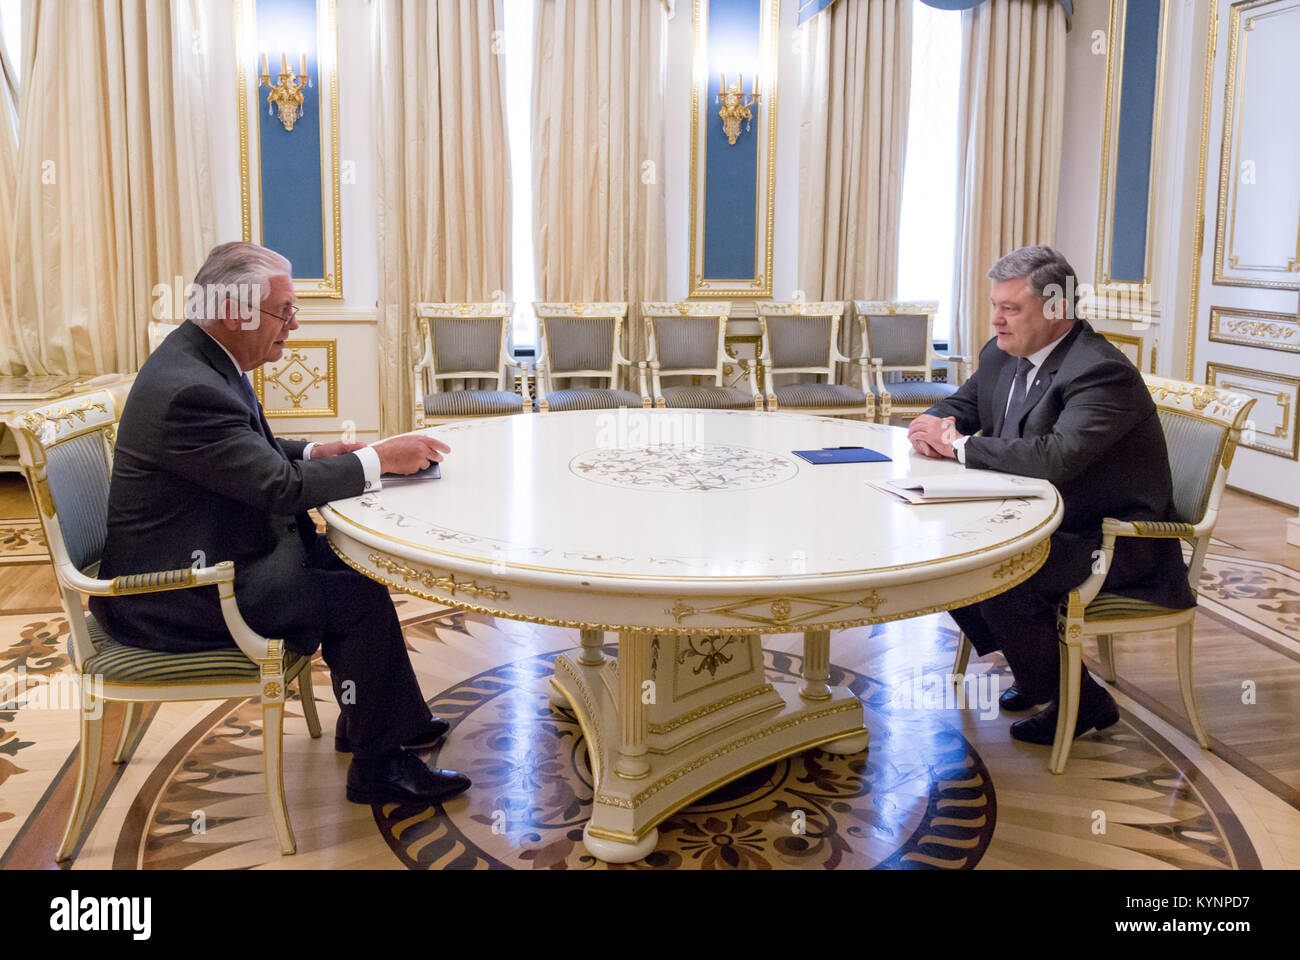 U.S. Secretary of State Rex Tillerson chats with President Petro Poroshenko before their bilateral meeting in Kyiv, Ukraine, on July 9, 2017. Secretary Tillerson Meets With President Poroshenko 35689050181 o Stock Photo